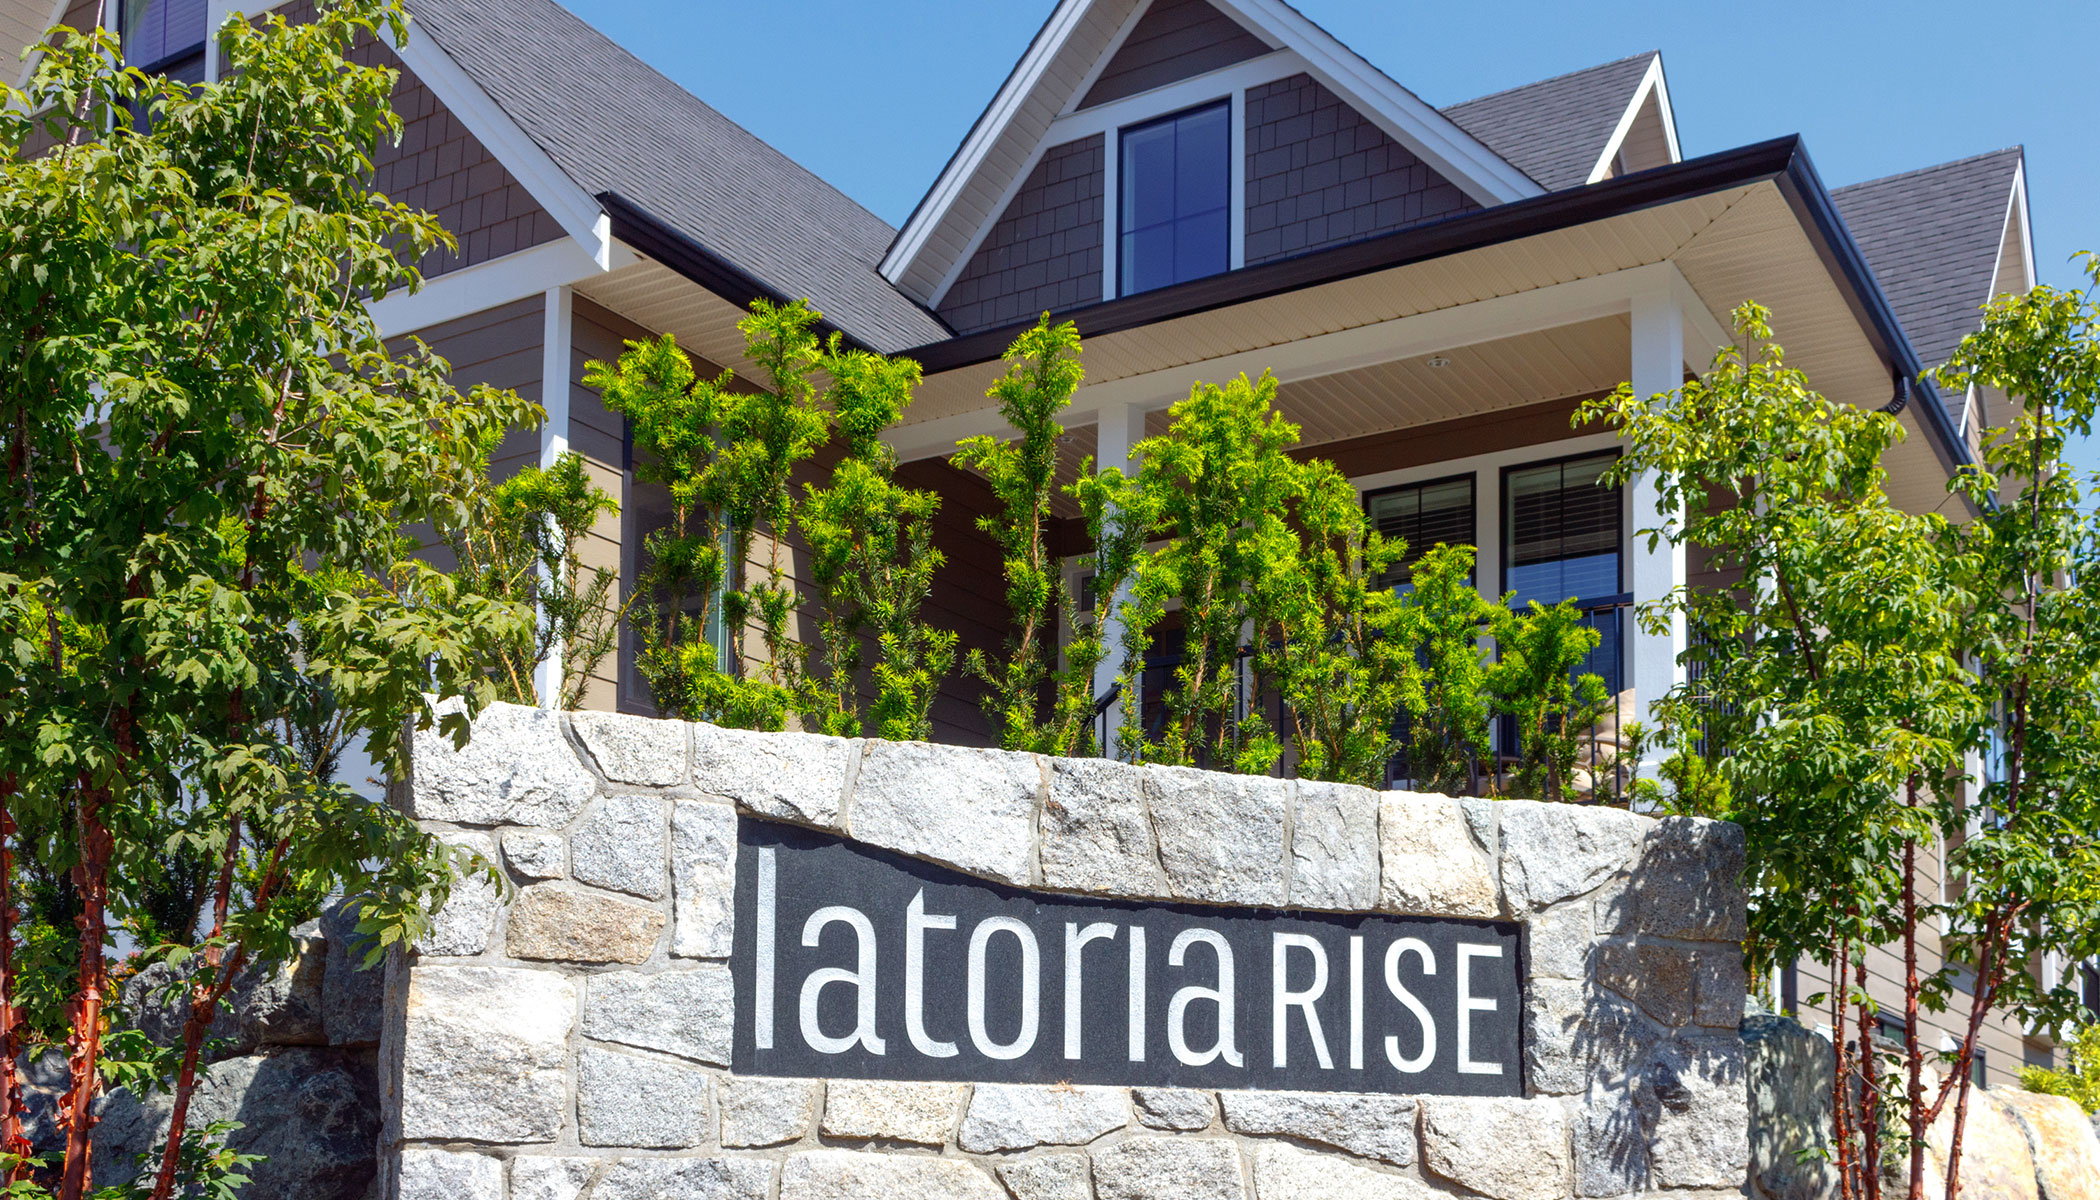 Latoria Rise Homeowner Testimonials